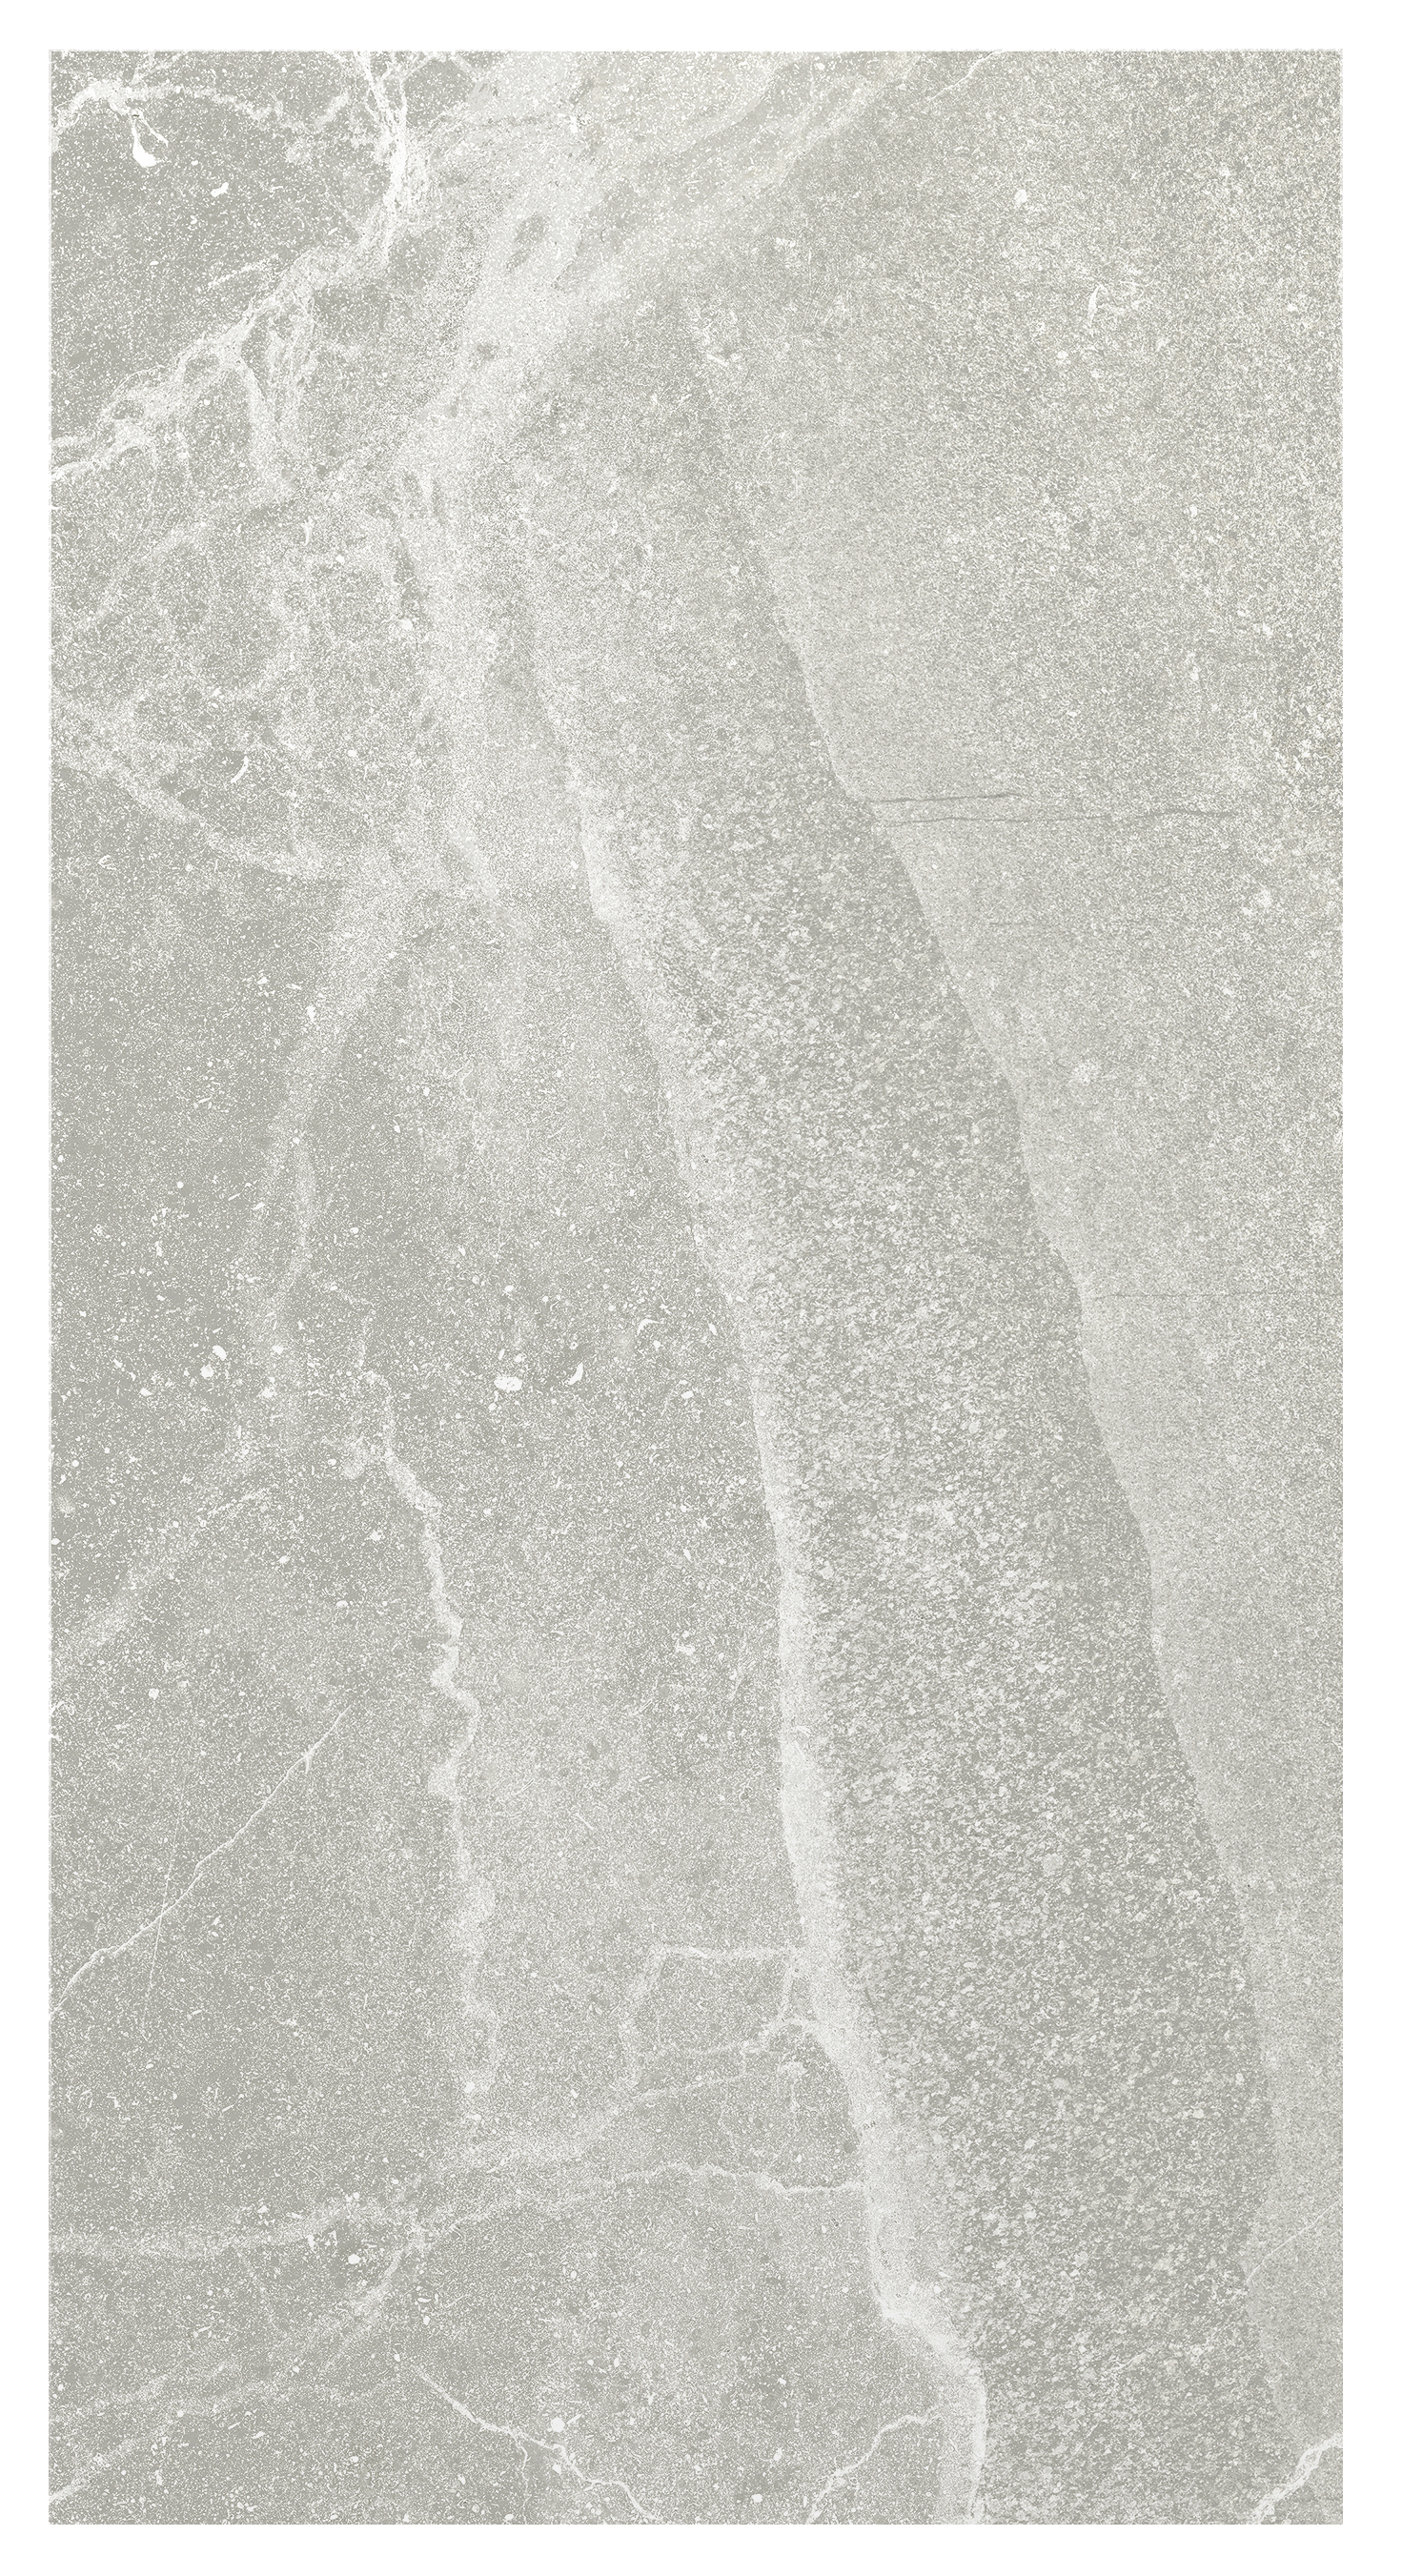 Wickes Mason Grey Porcelain Wall & Floor Tile - 600mm x 300mm - Sample